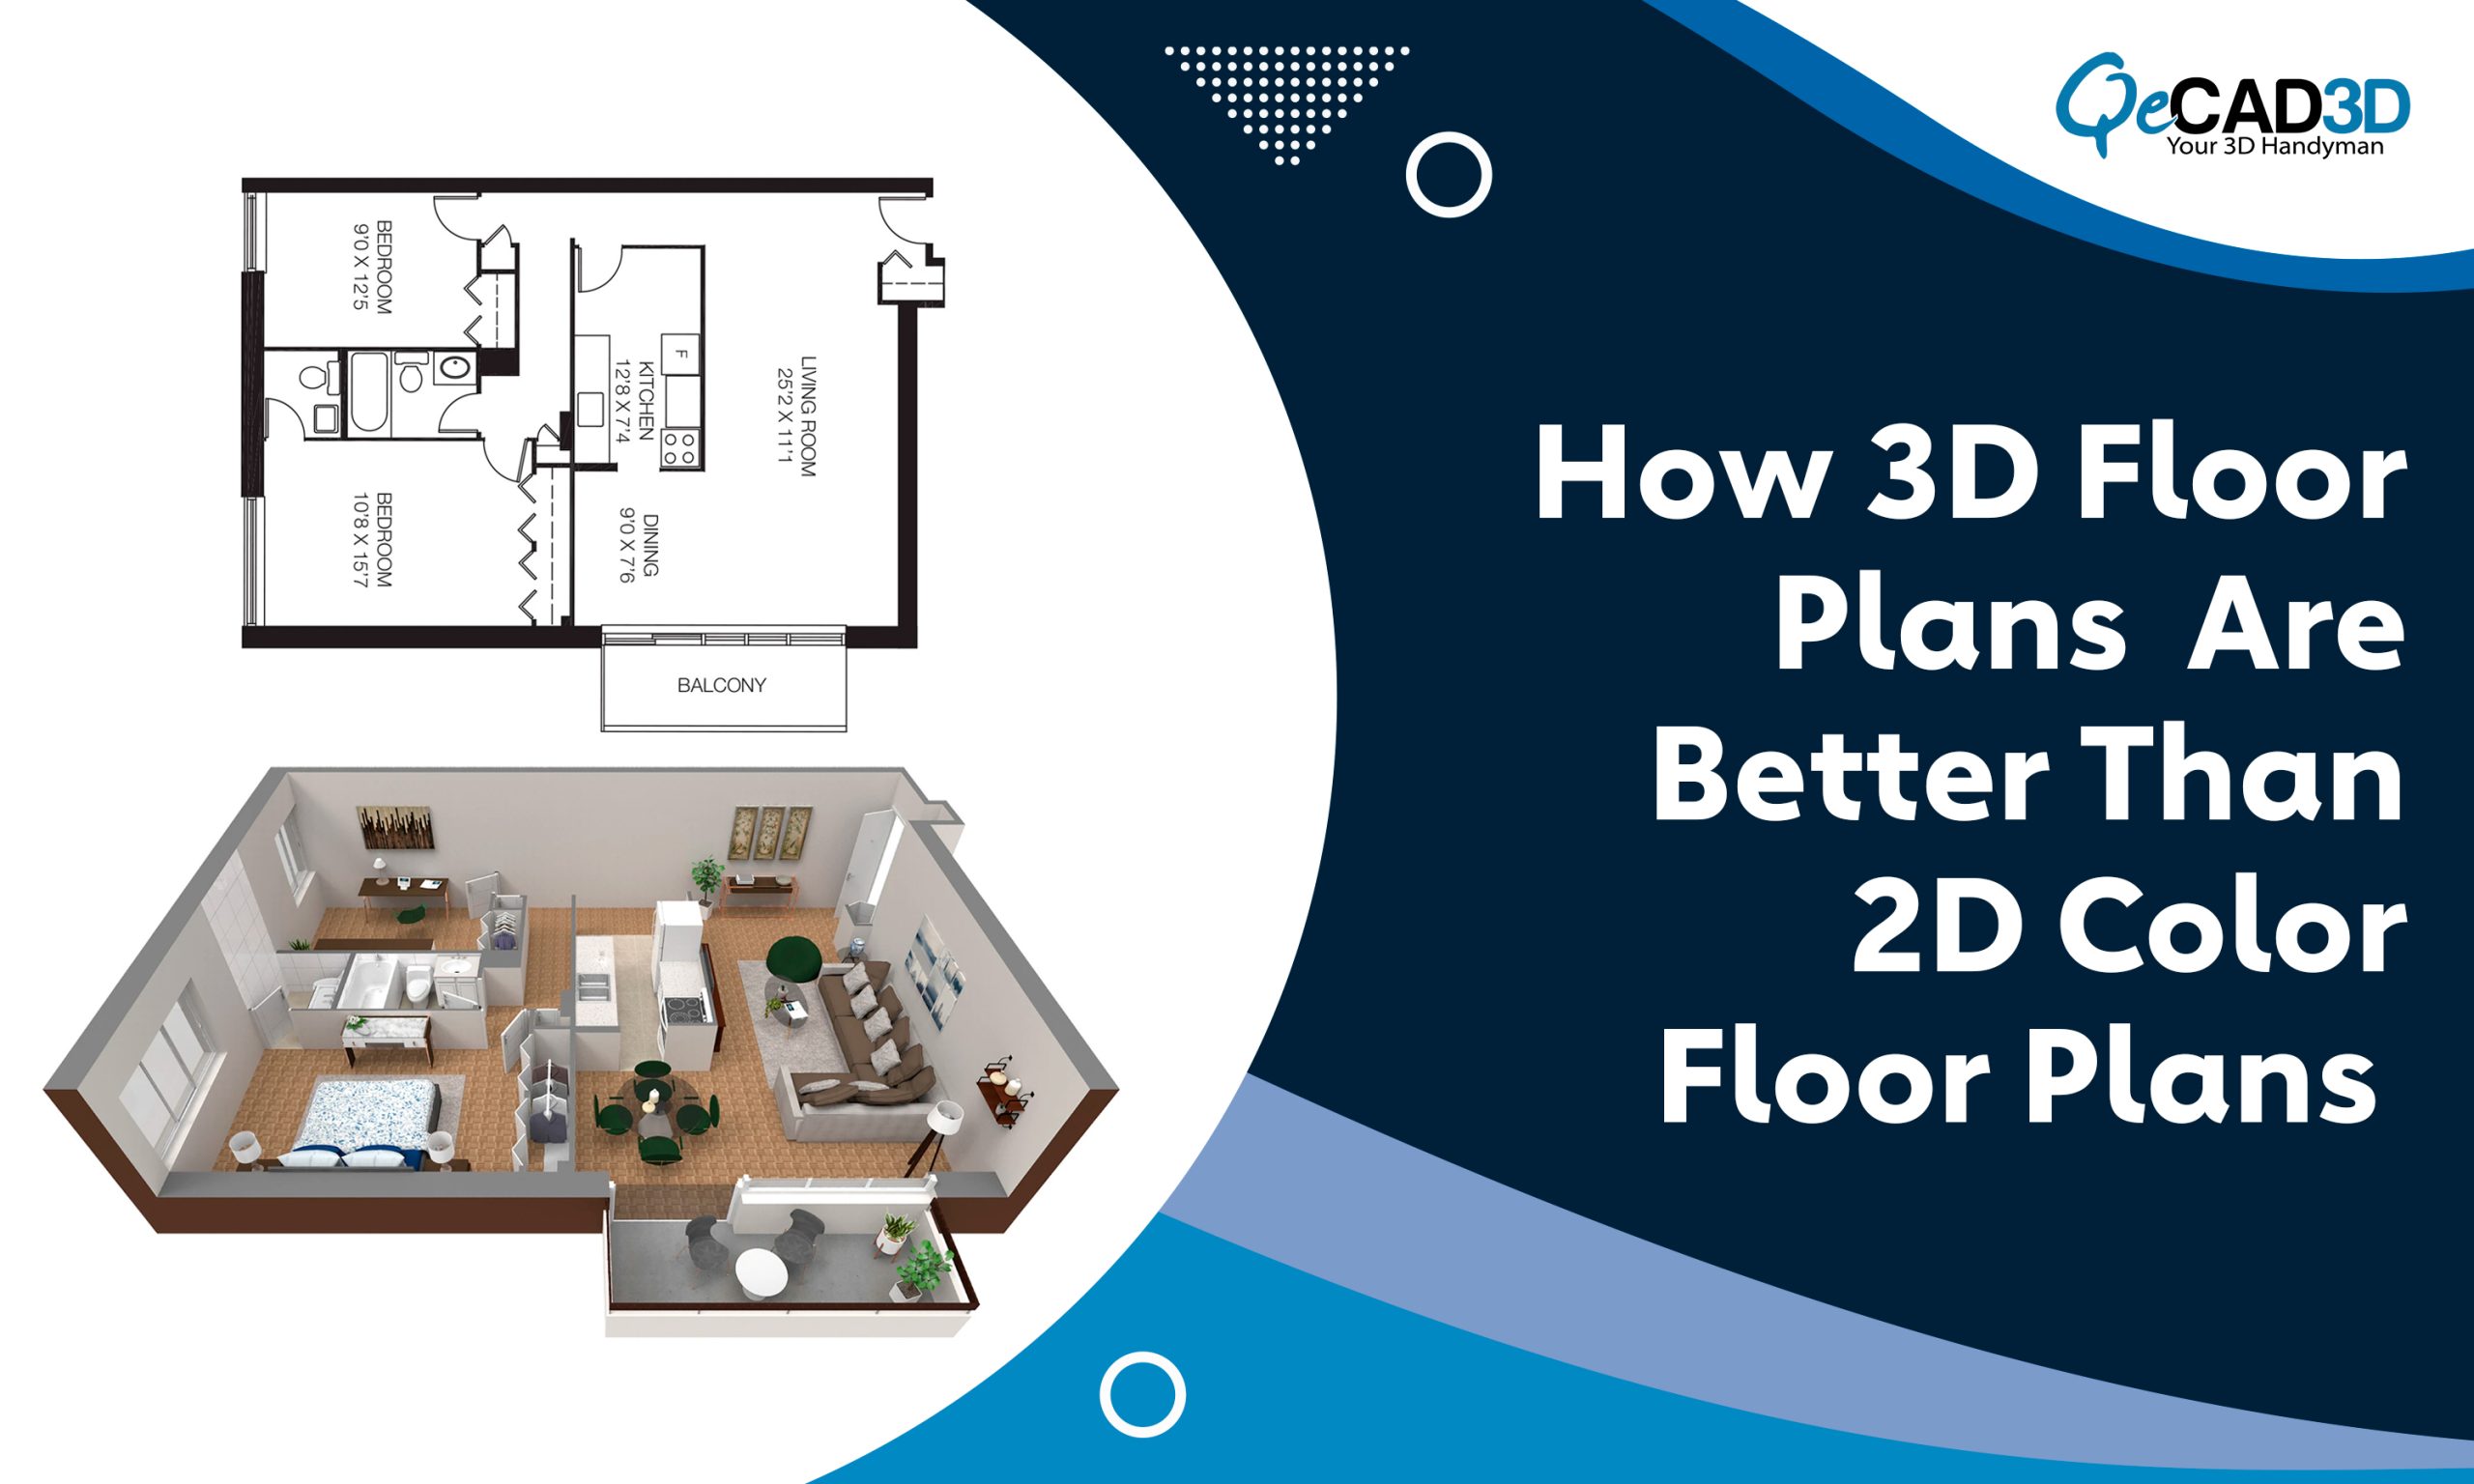 How 3D Floor Plans Are Better Than 2D Color Floor Plans